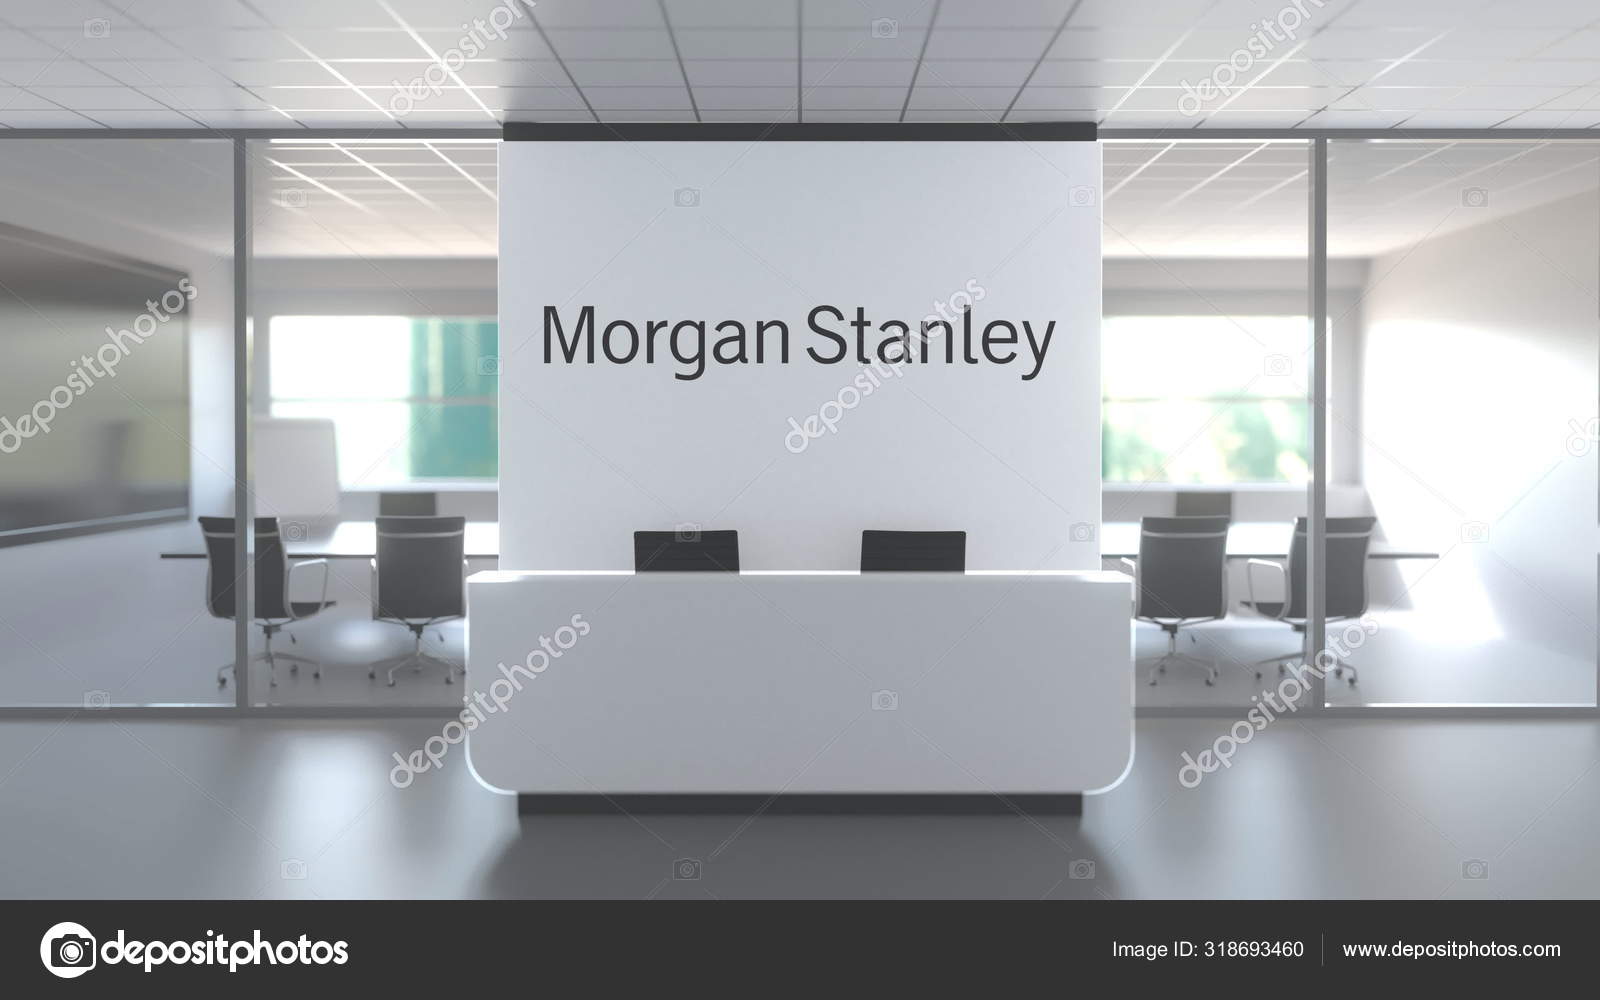 Morgan Stanley Logo Above Reception Desk In The Modern Office